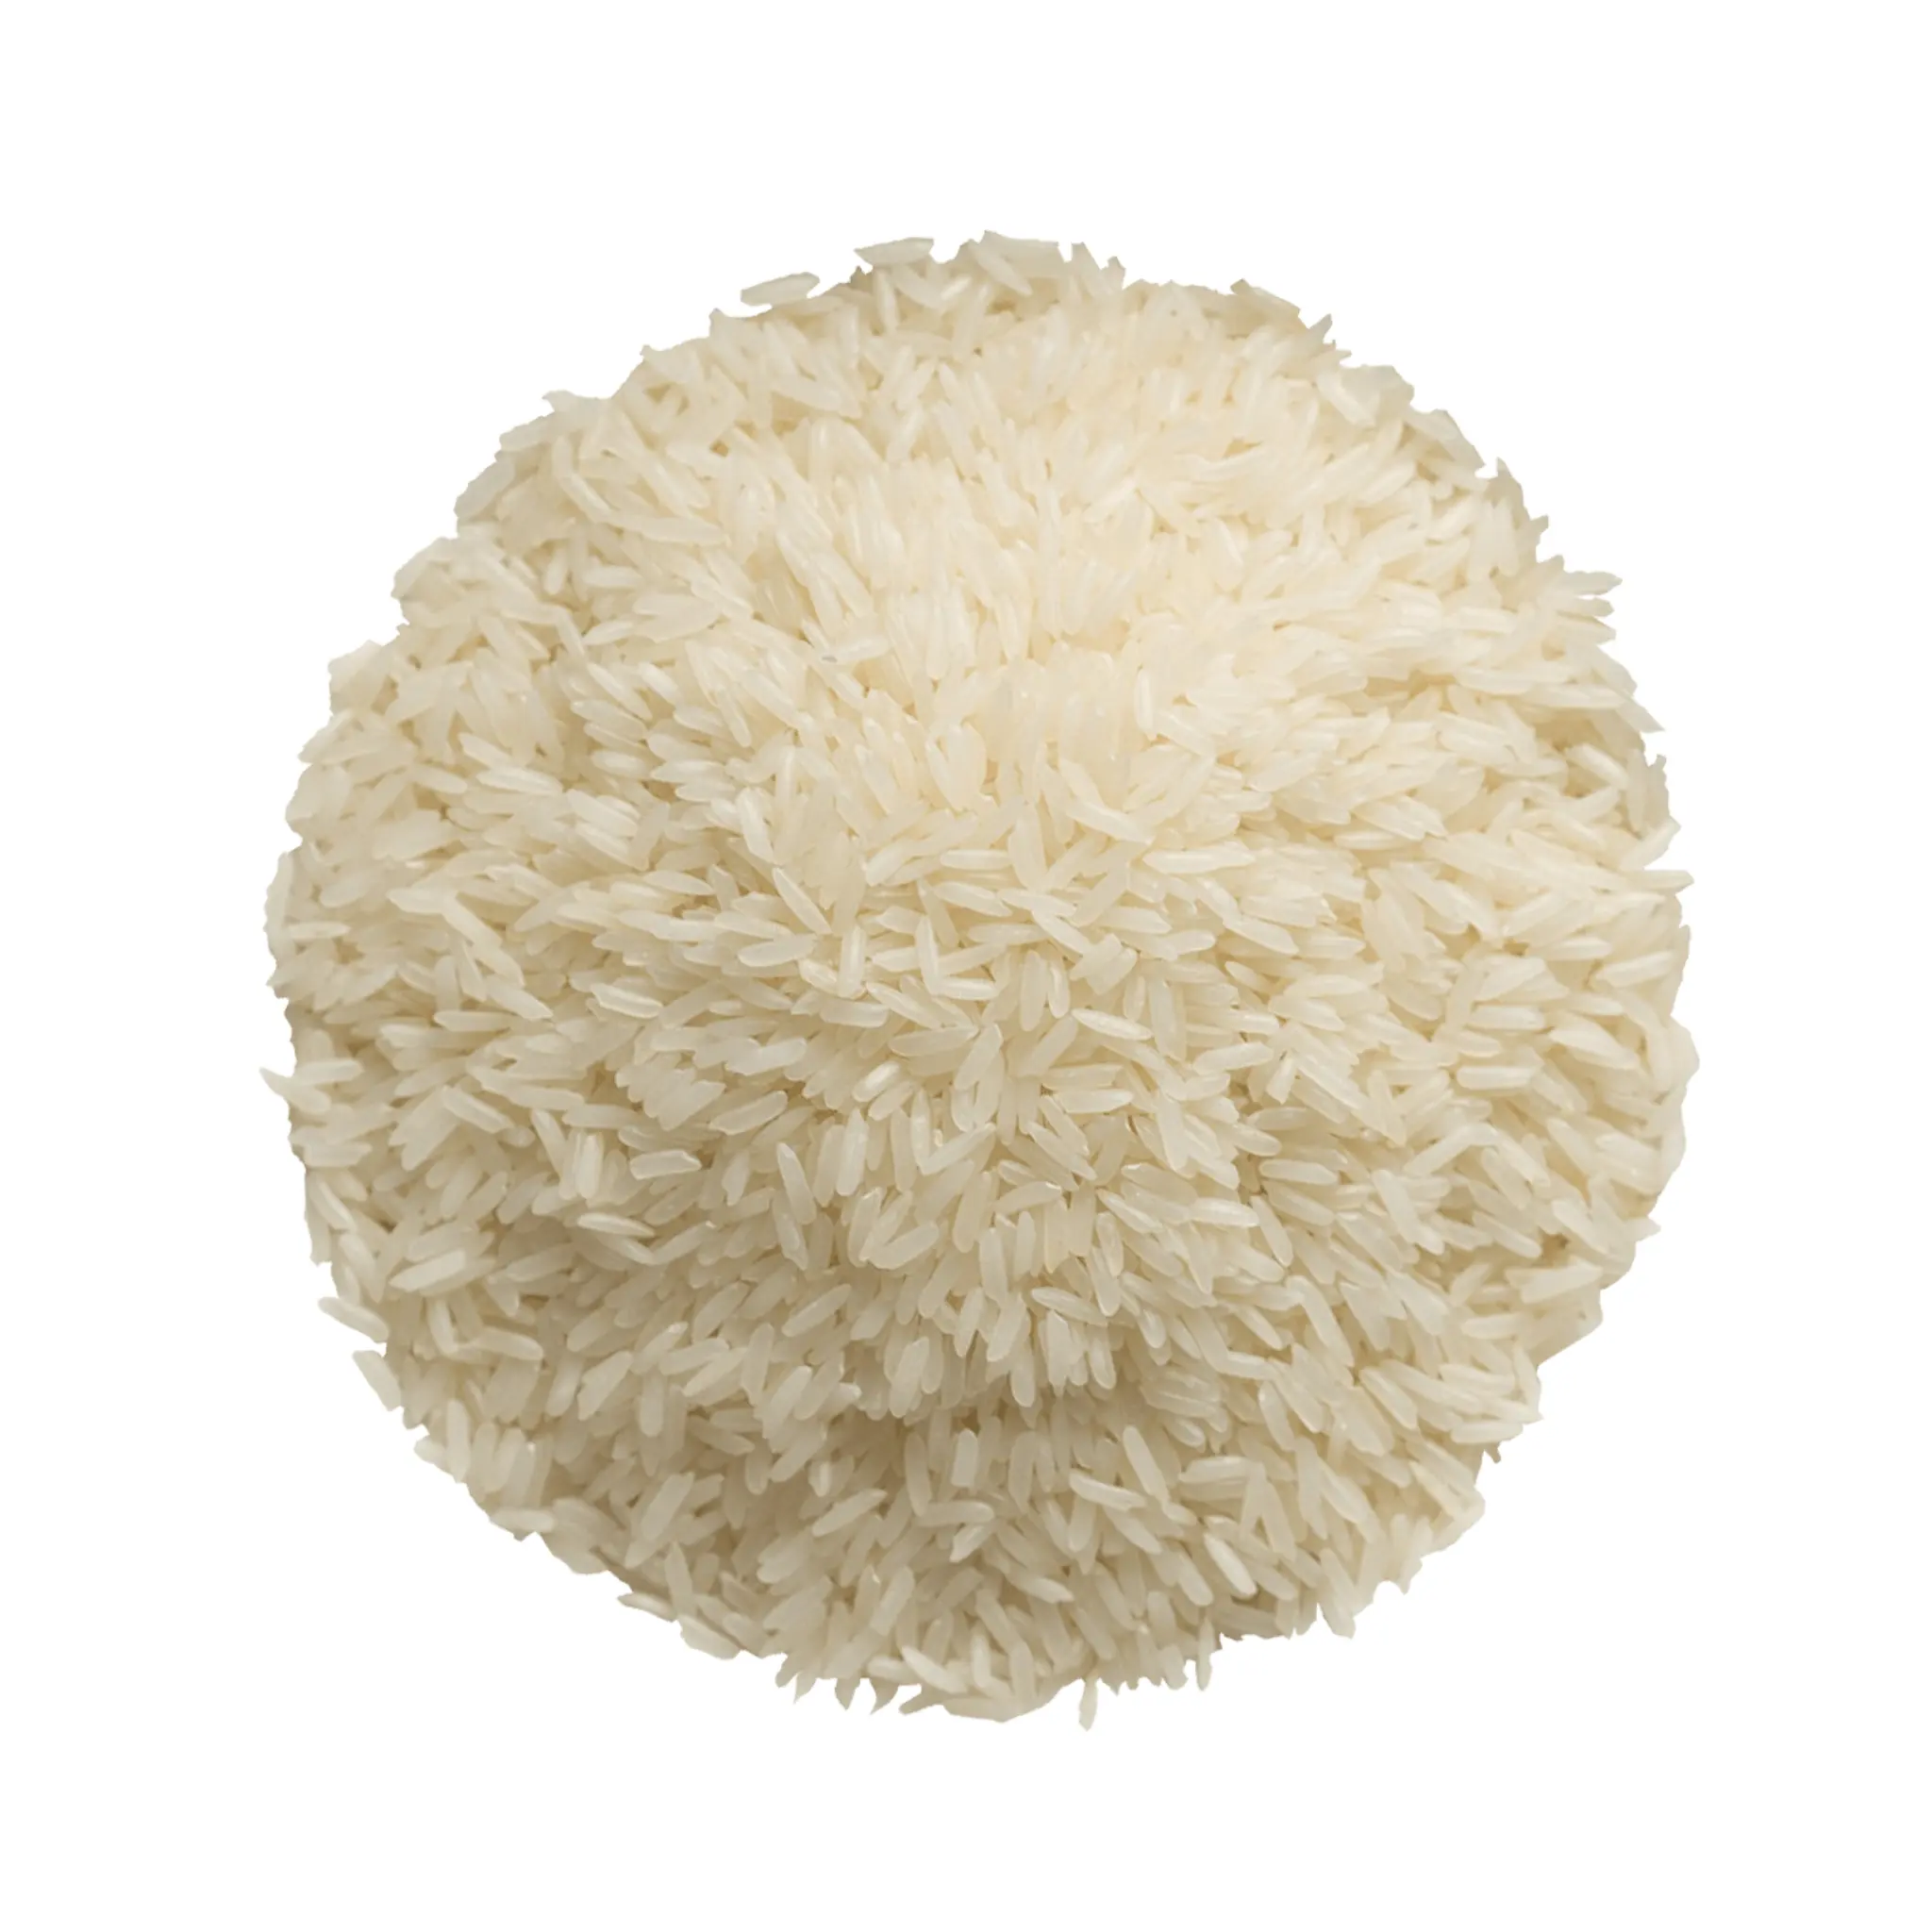 Vietnam High Competitive Price Rice Big Bulk Long Grain White Rice 5% 10% 15% 20% Broken Big Bag 50Kg Long grain - VILACONIC